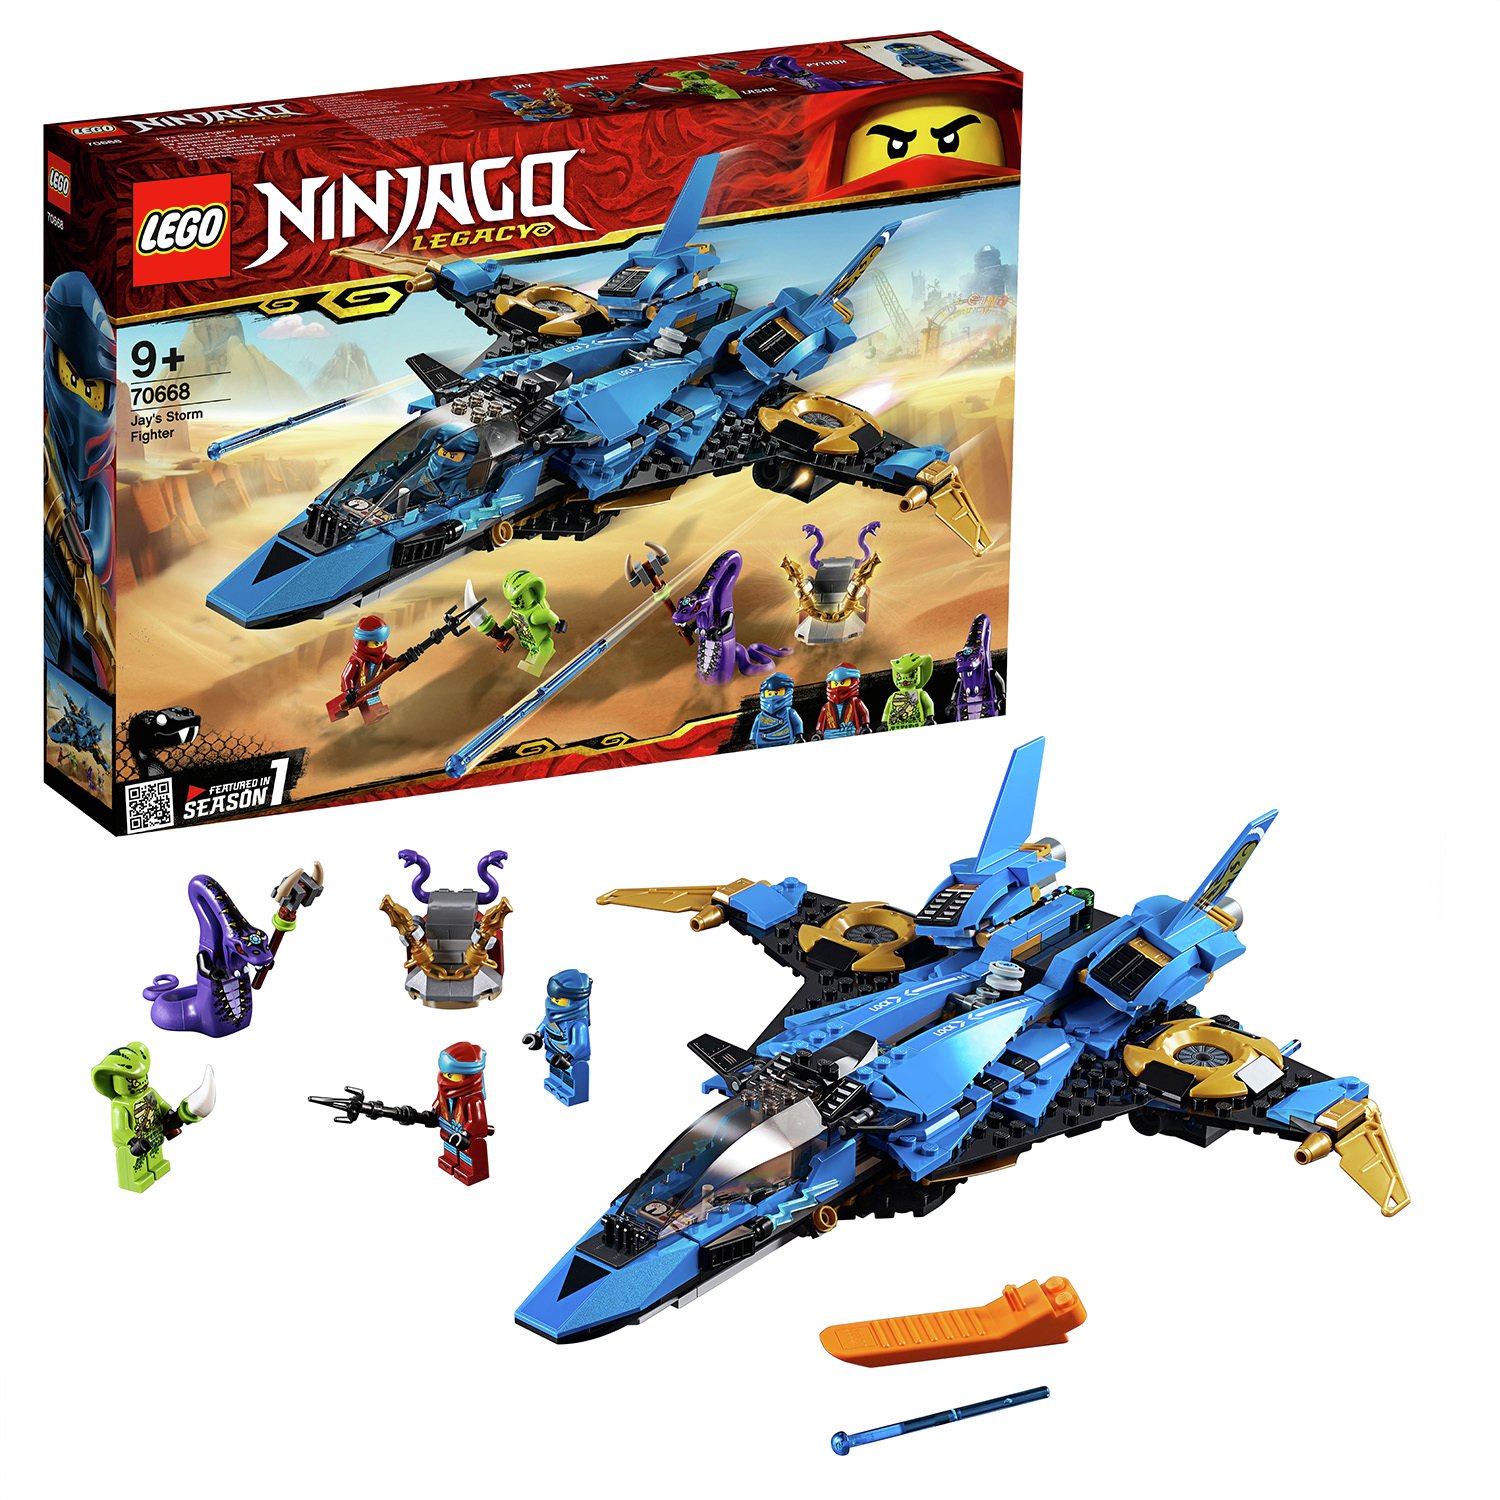 LEGO Ninjago Jay's Storm Fighter Toy Jet Plane - 70668